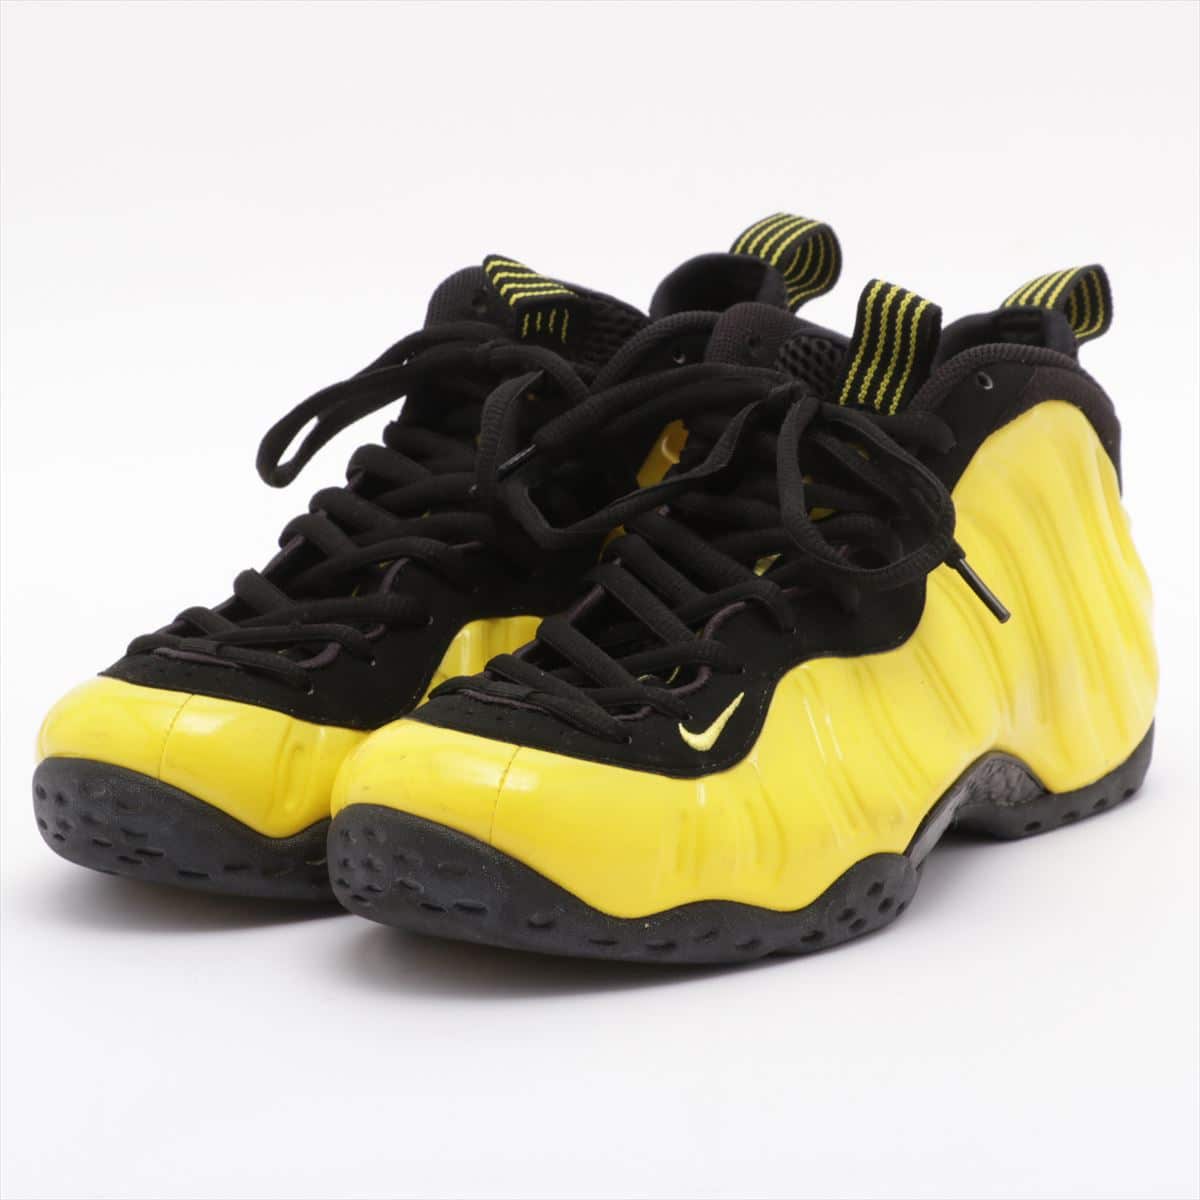 Nike Rubber Sneakers 26.0cm Men's Yellow AIR FOAMPOSITE ONE 314996-701